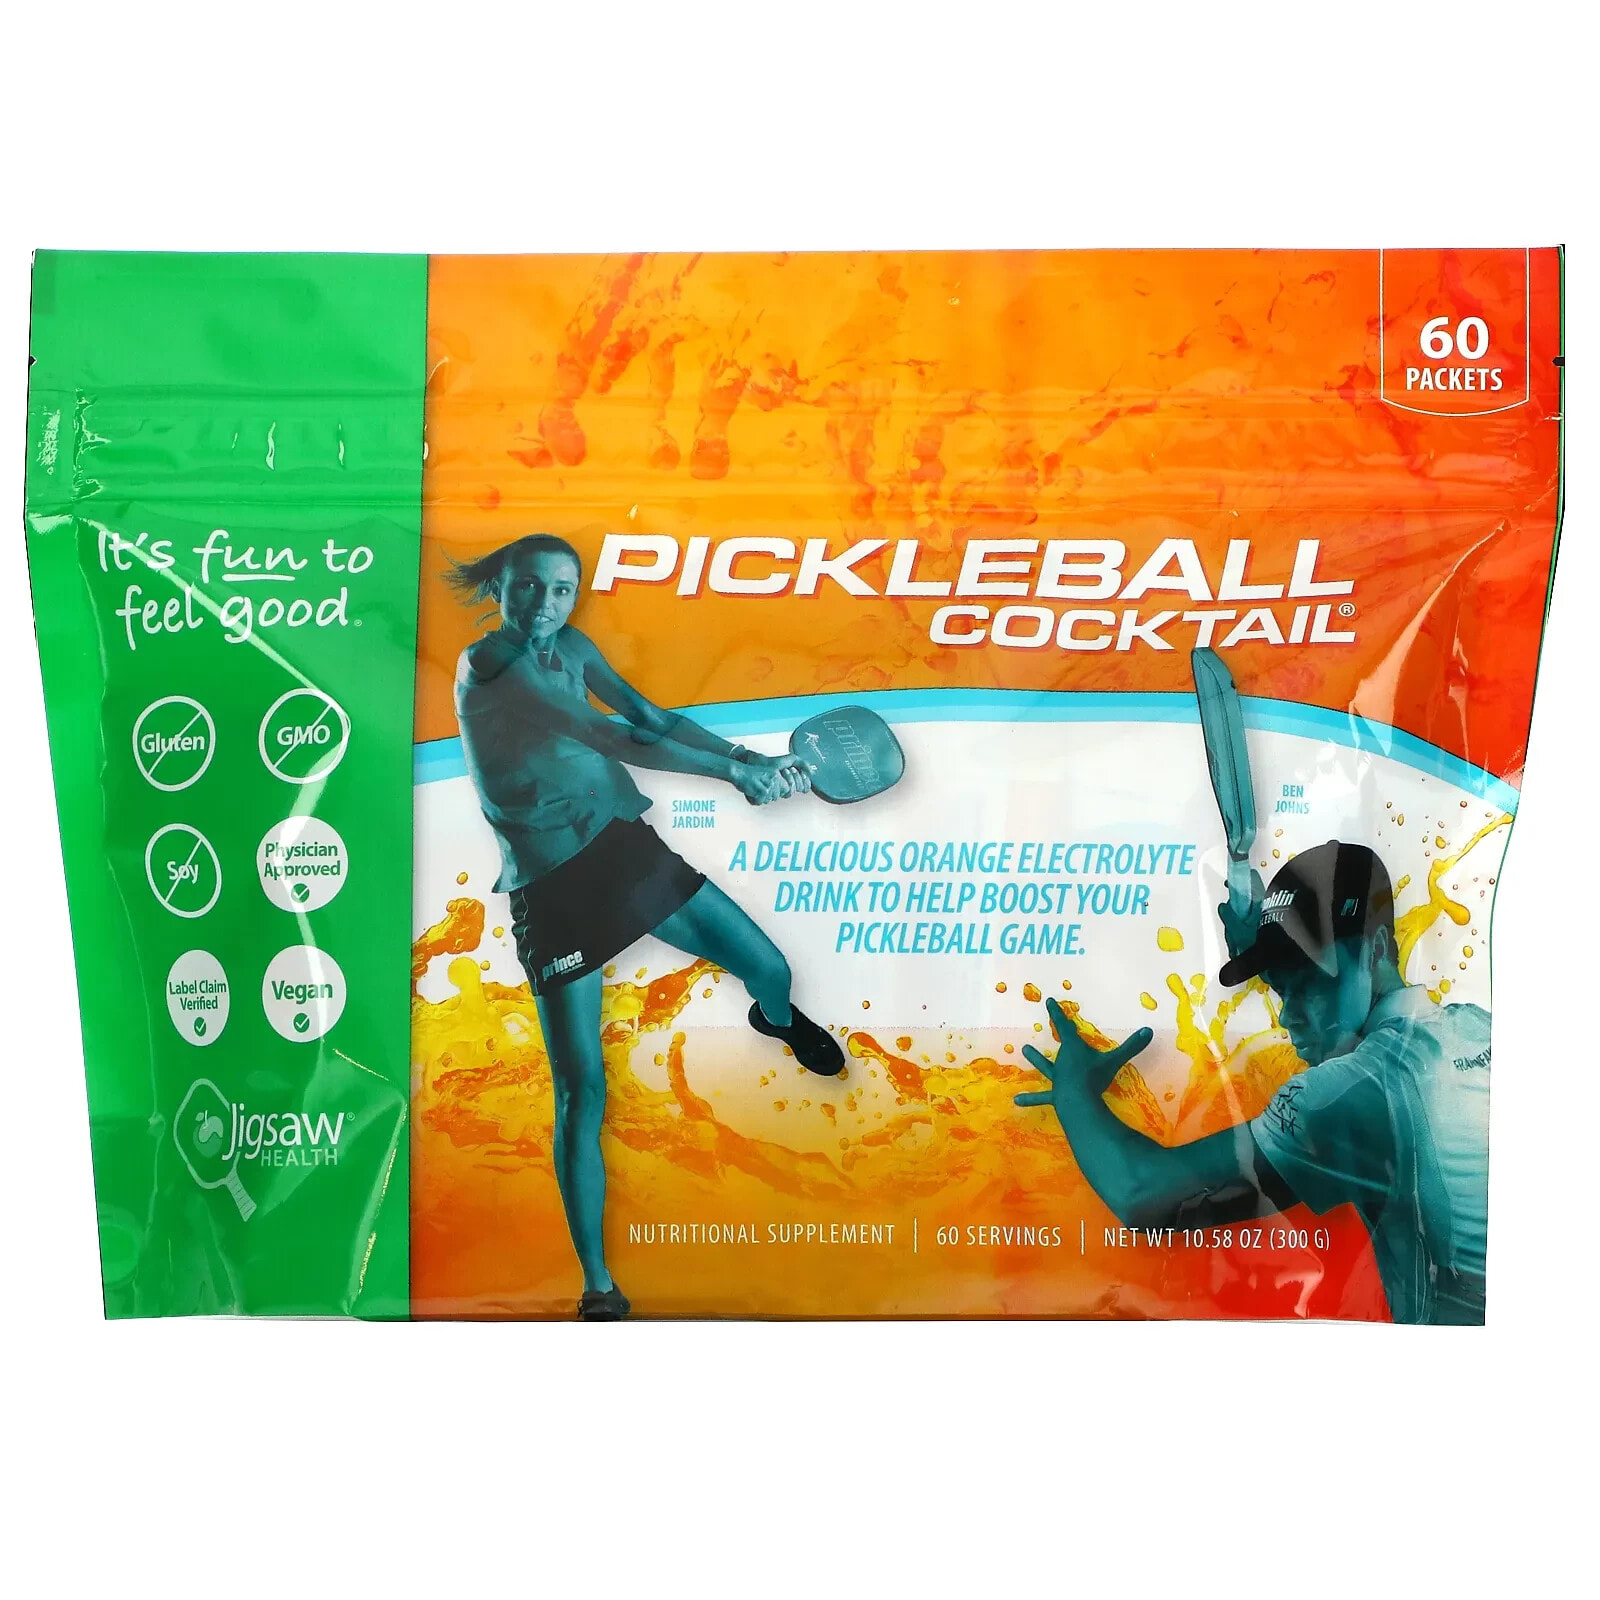 Pickleball Cocktail, Orange Electrolyte Drink, 60 Packets, 10.58 oz (300 g)